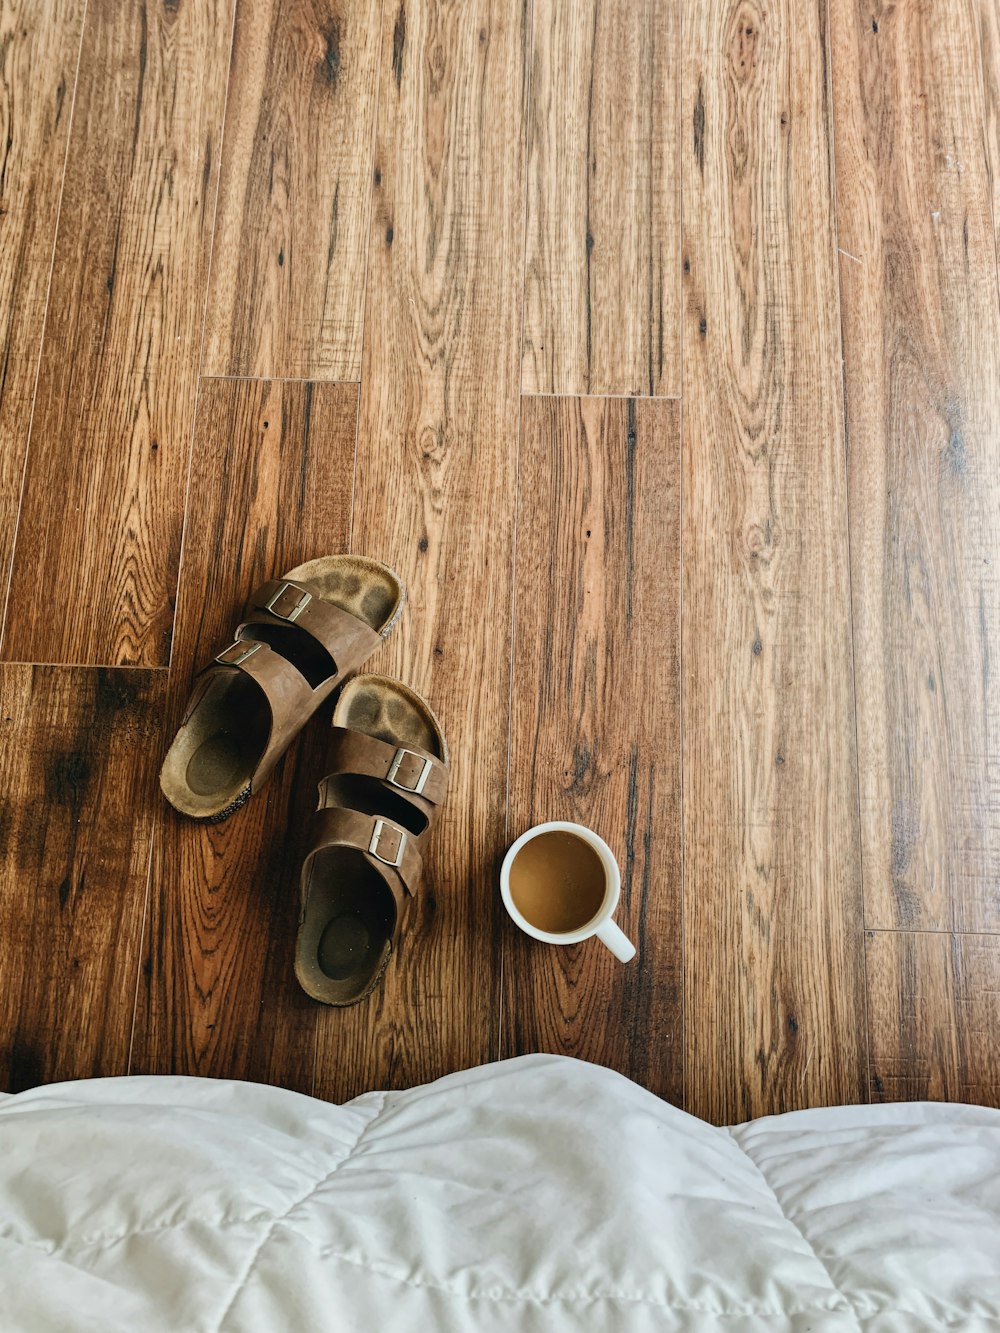 brown and black sandals on brown wooden floor